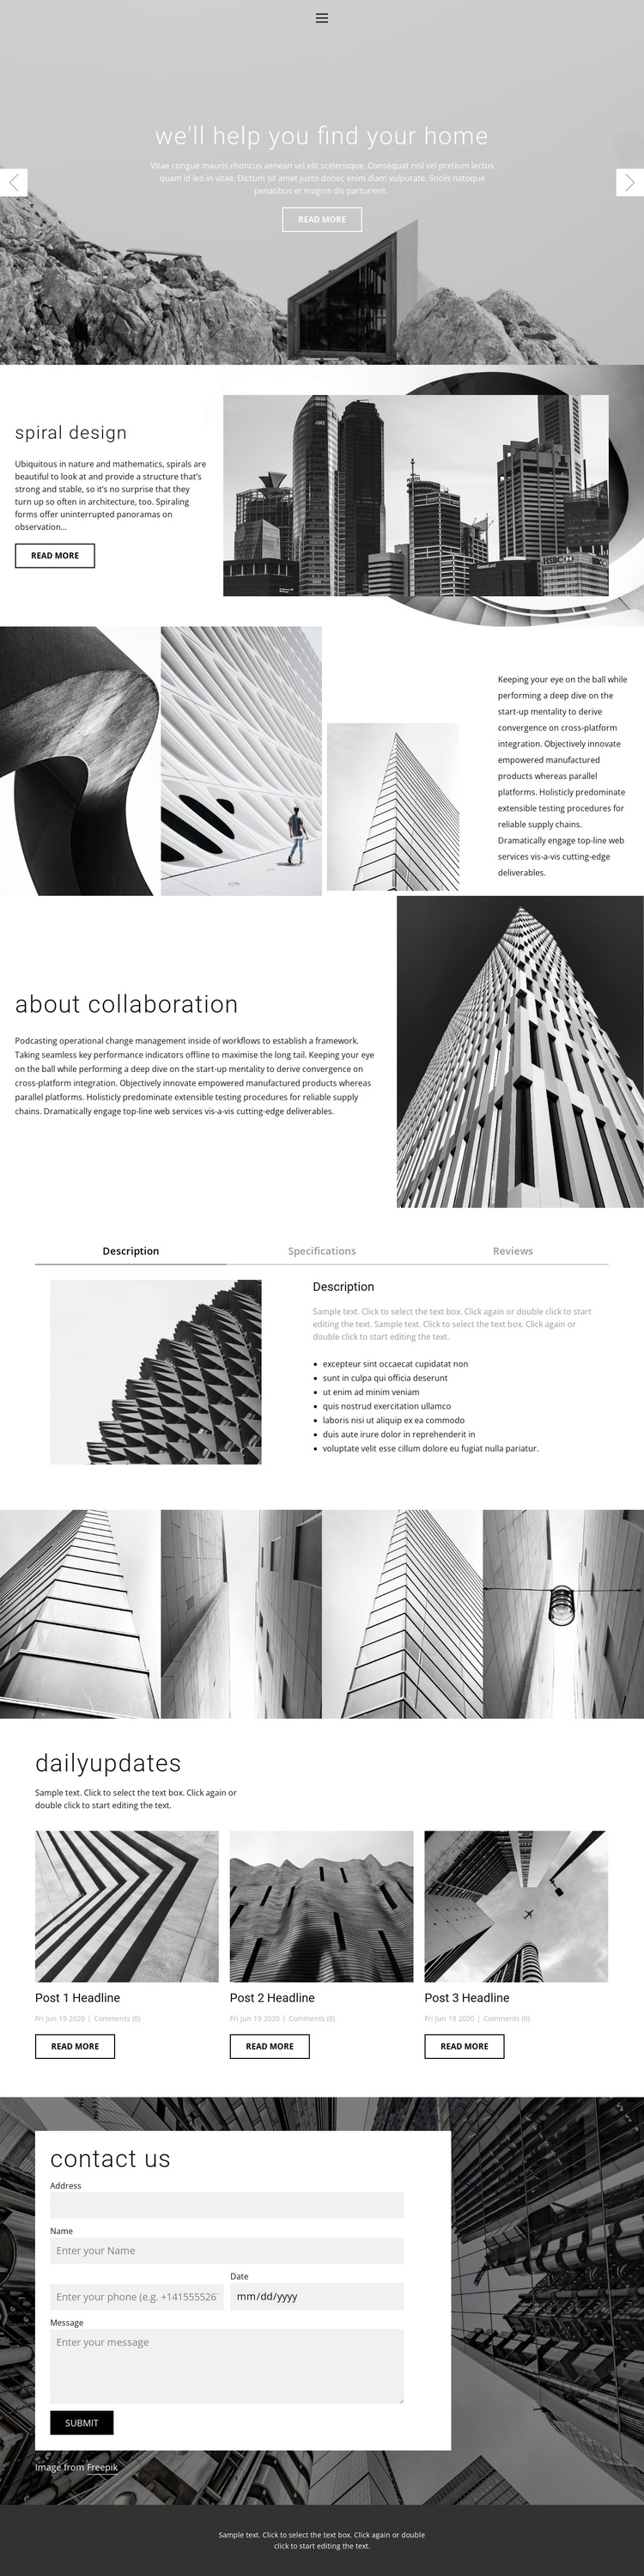 Architecture ideal studio Website Builder Software